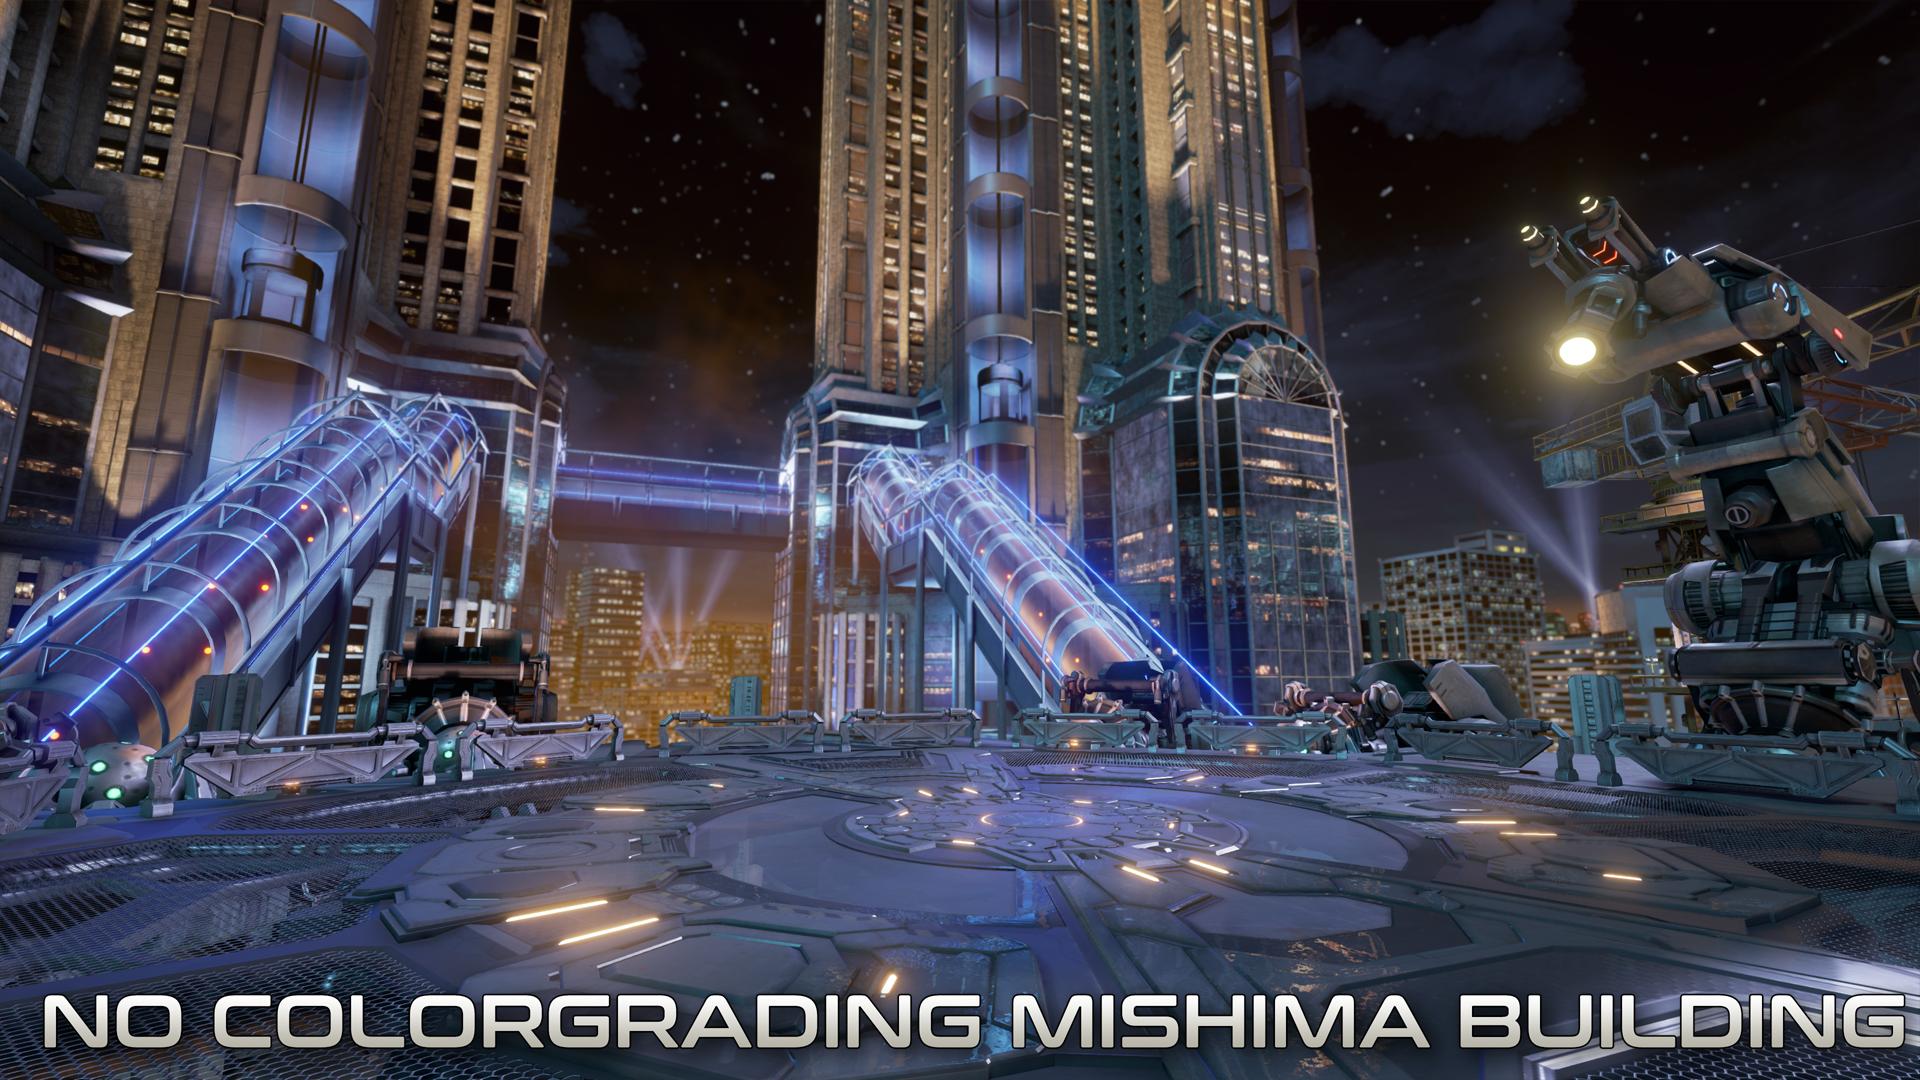 Mishima Building No Colorgrading